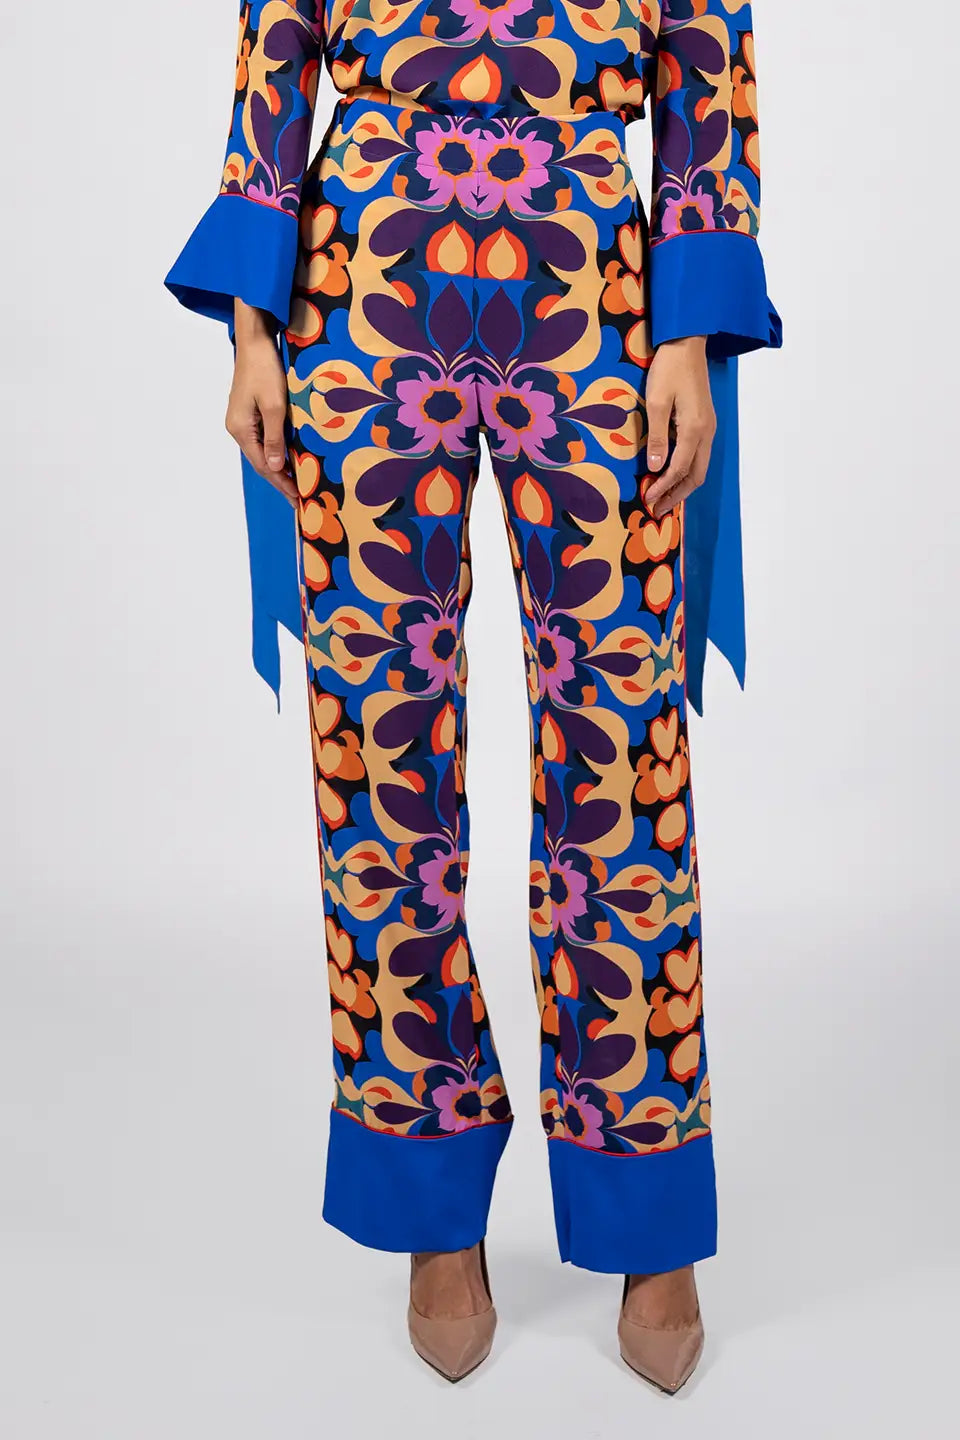 Shop online trendy Blue Women pants from Borgo de Nor Fashion designer. Product gallery 1